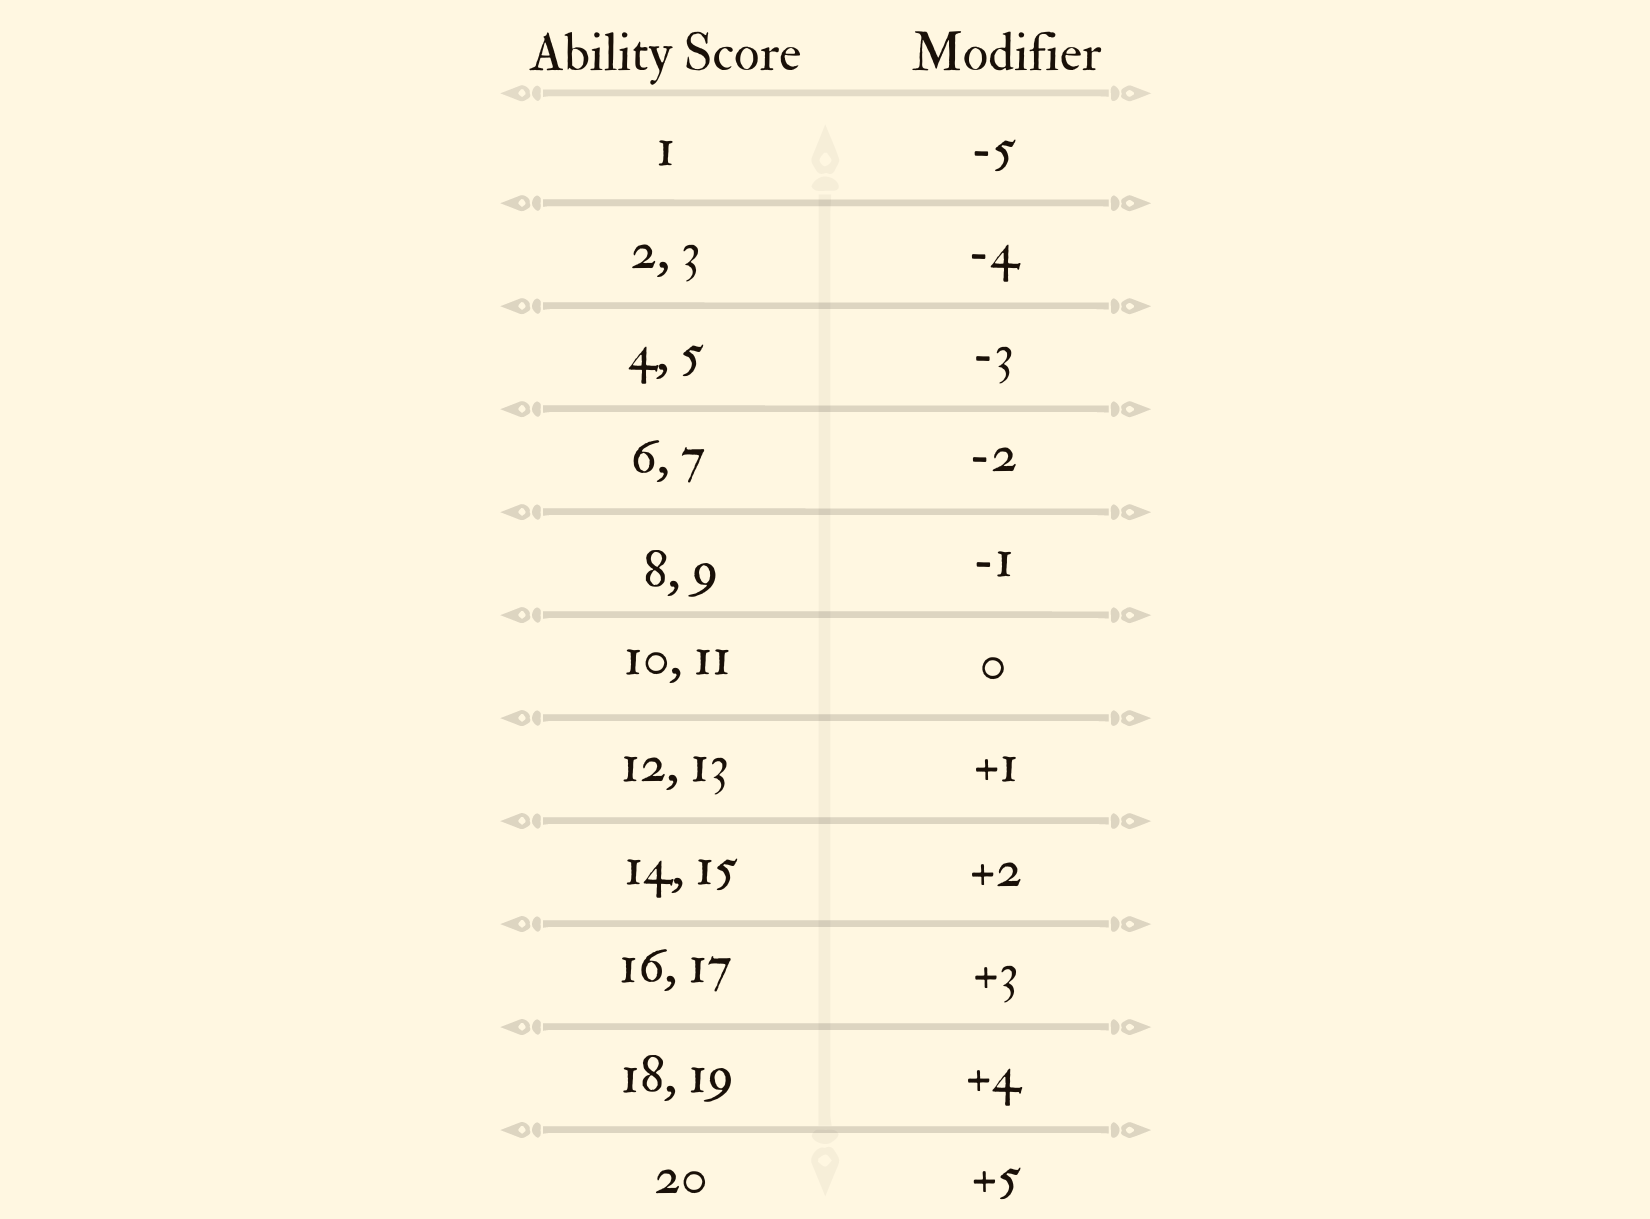 DND Ability score modifier table